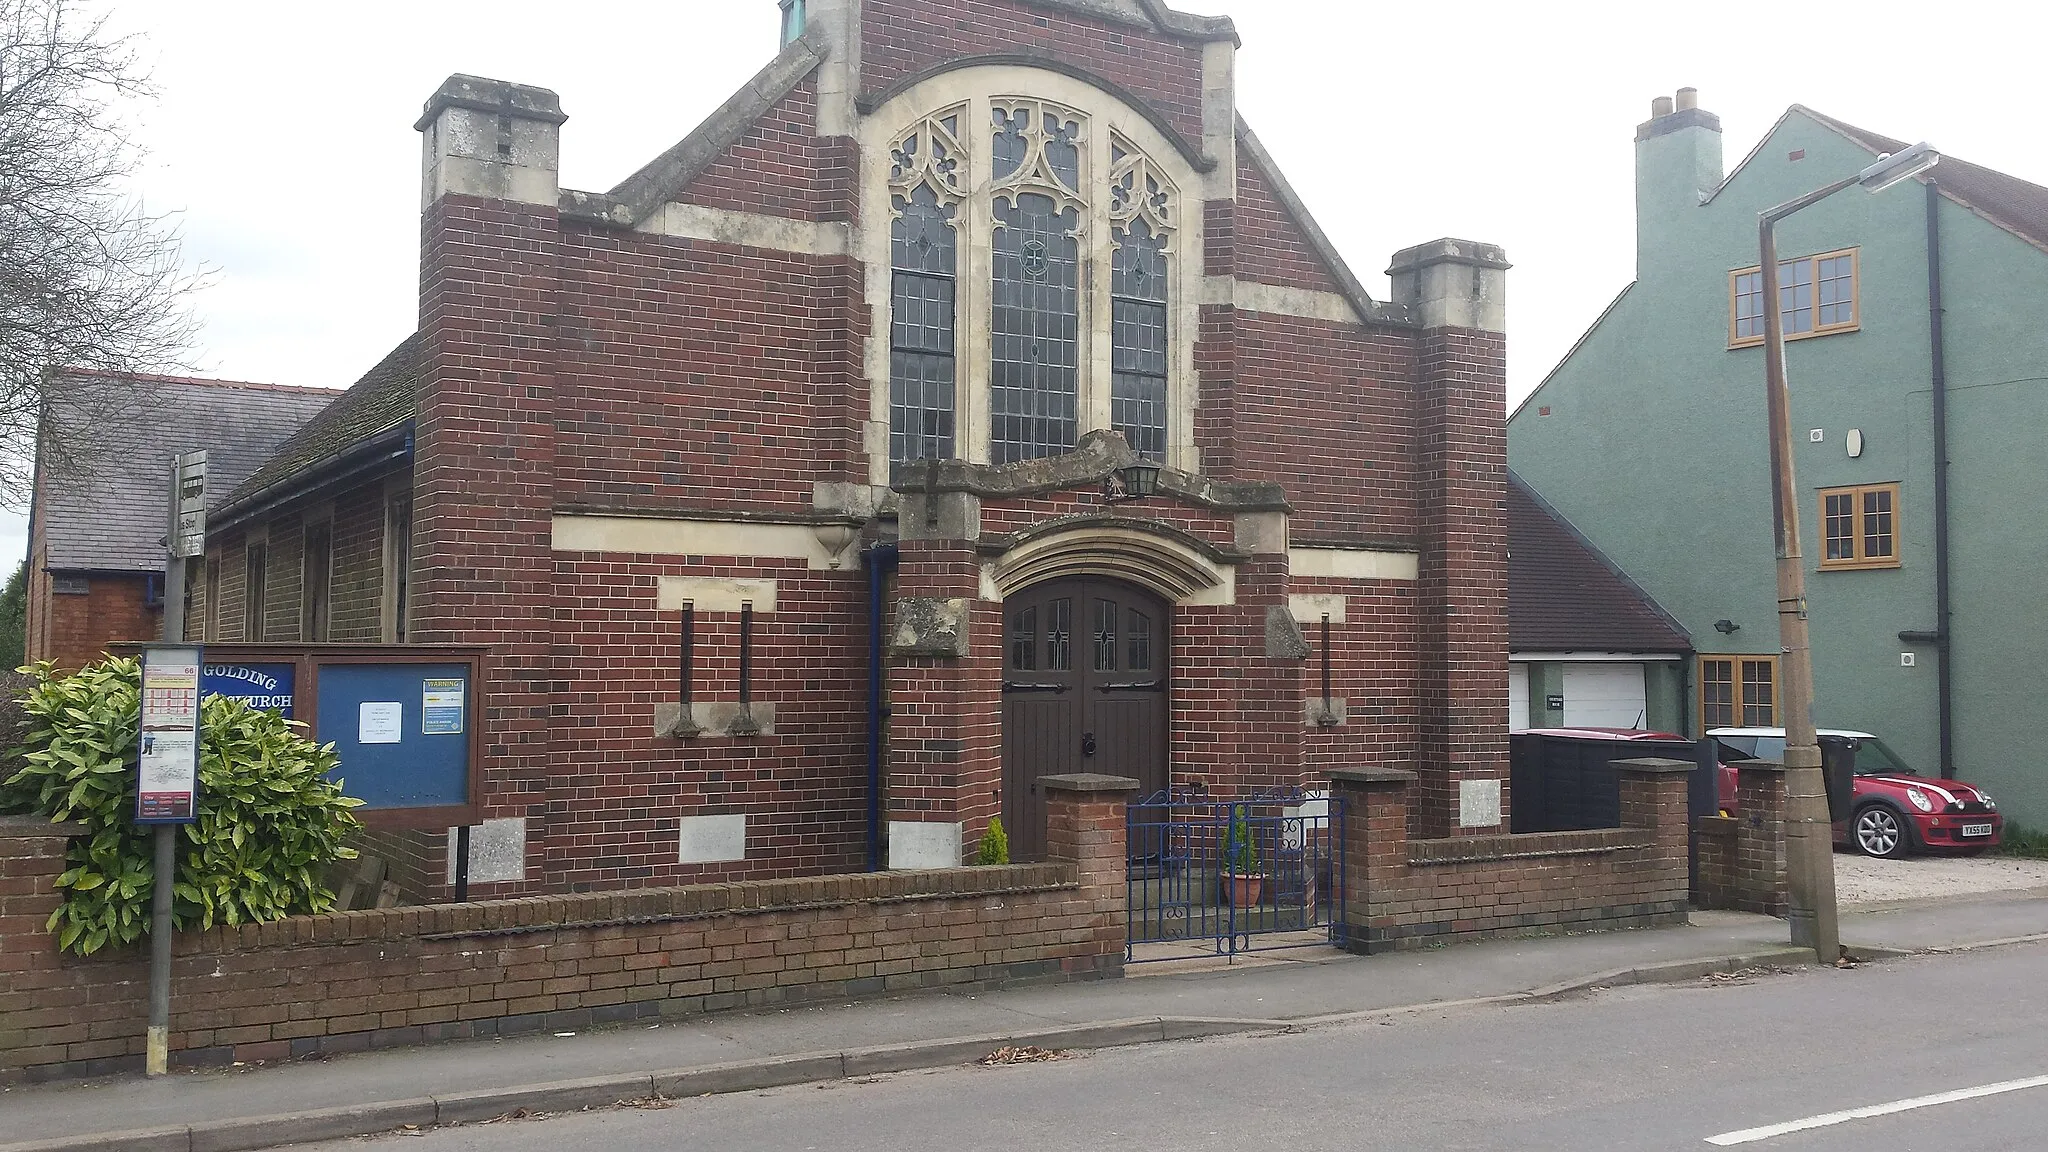 Photo showing: Methodist Church